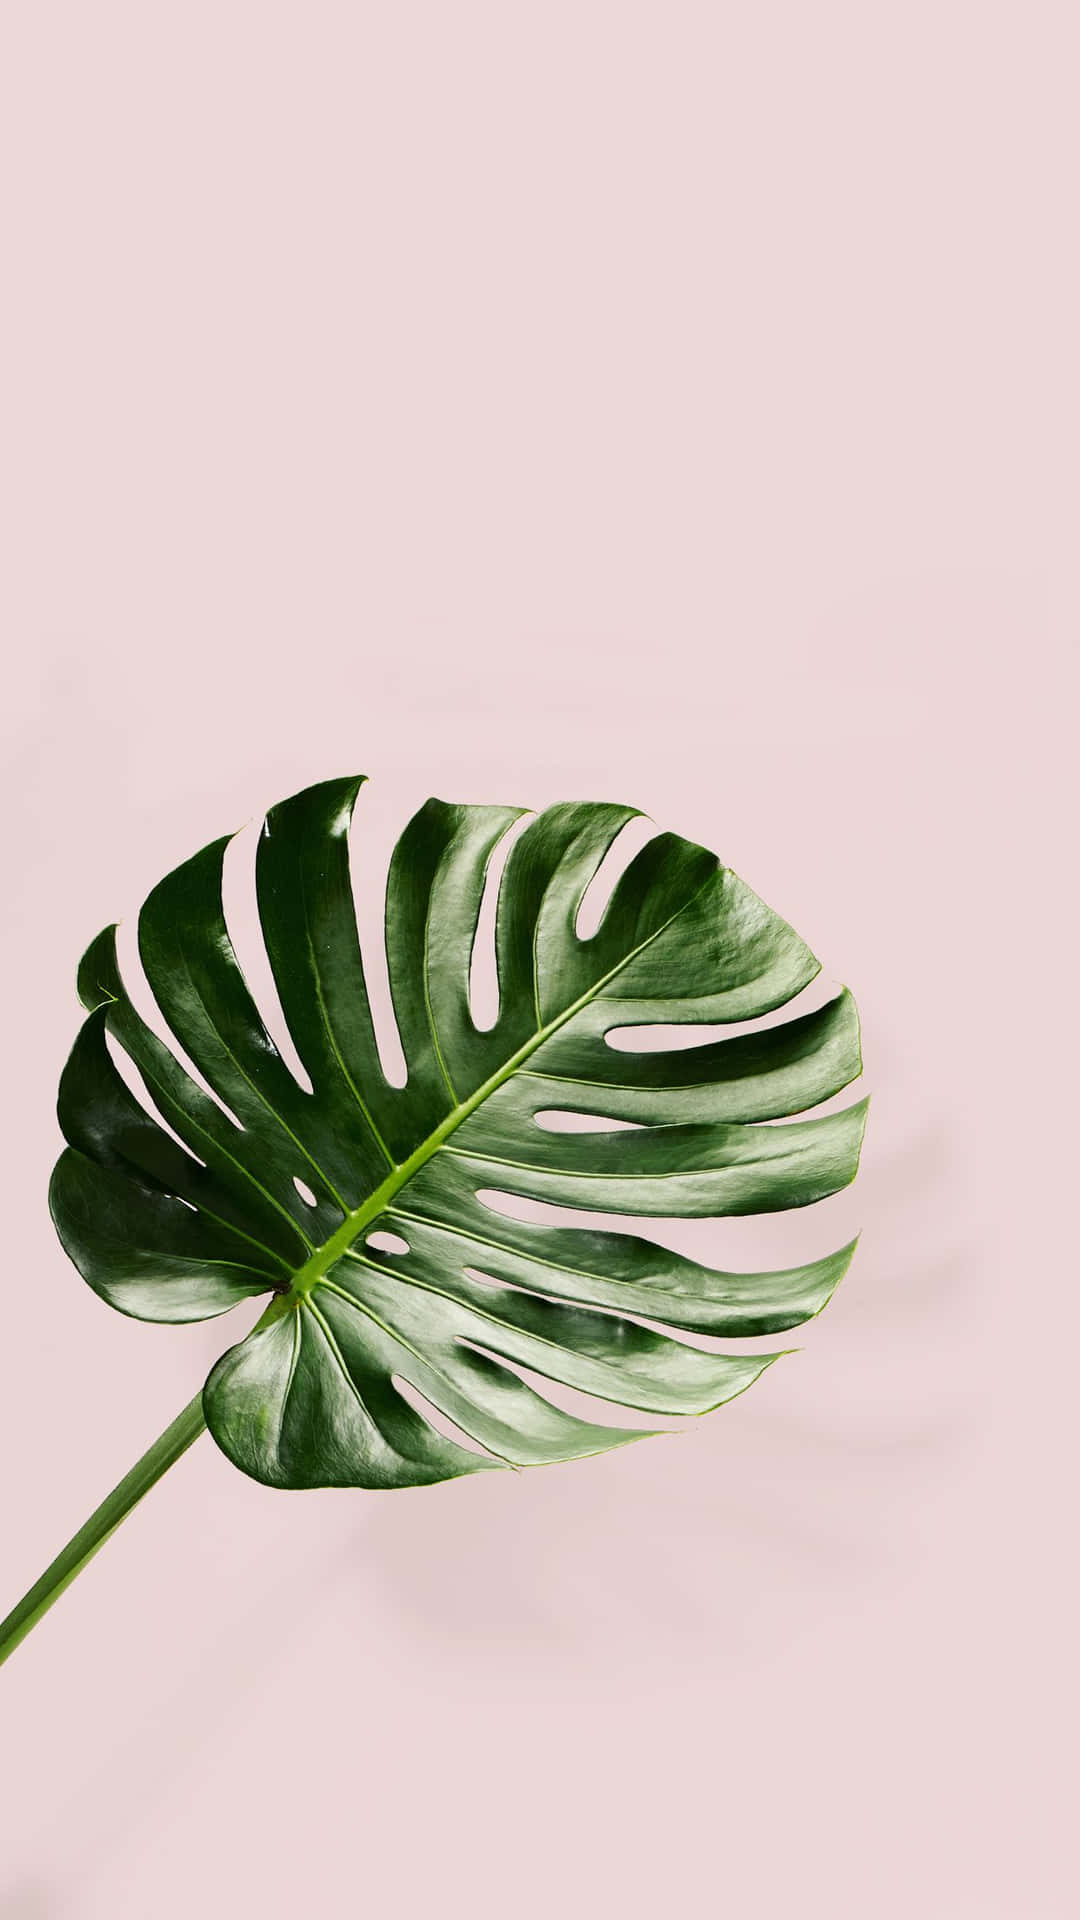 Lush Greenery - A Beautiful Display of Tropical Plants Wallpaper